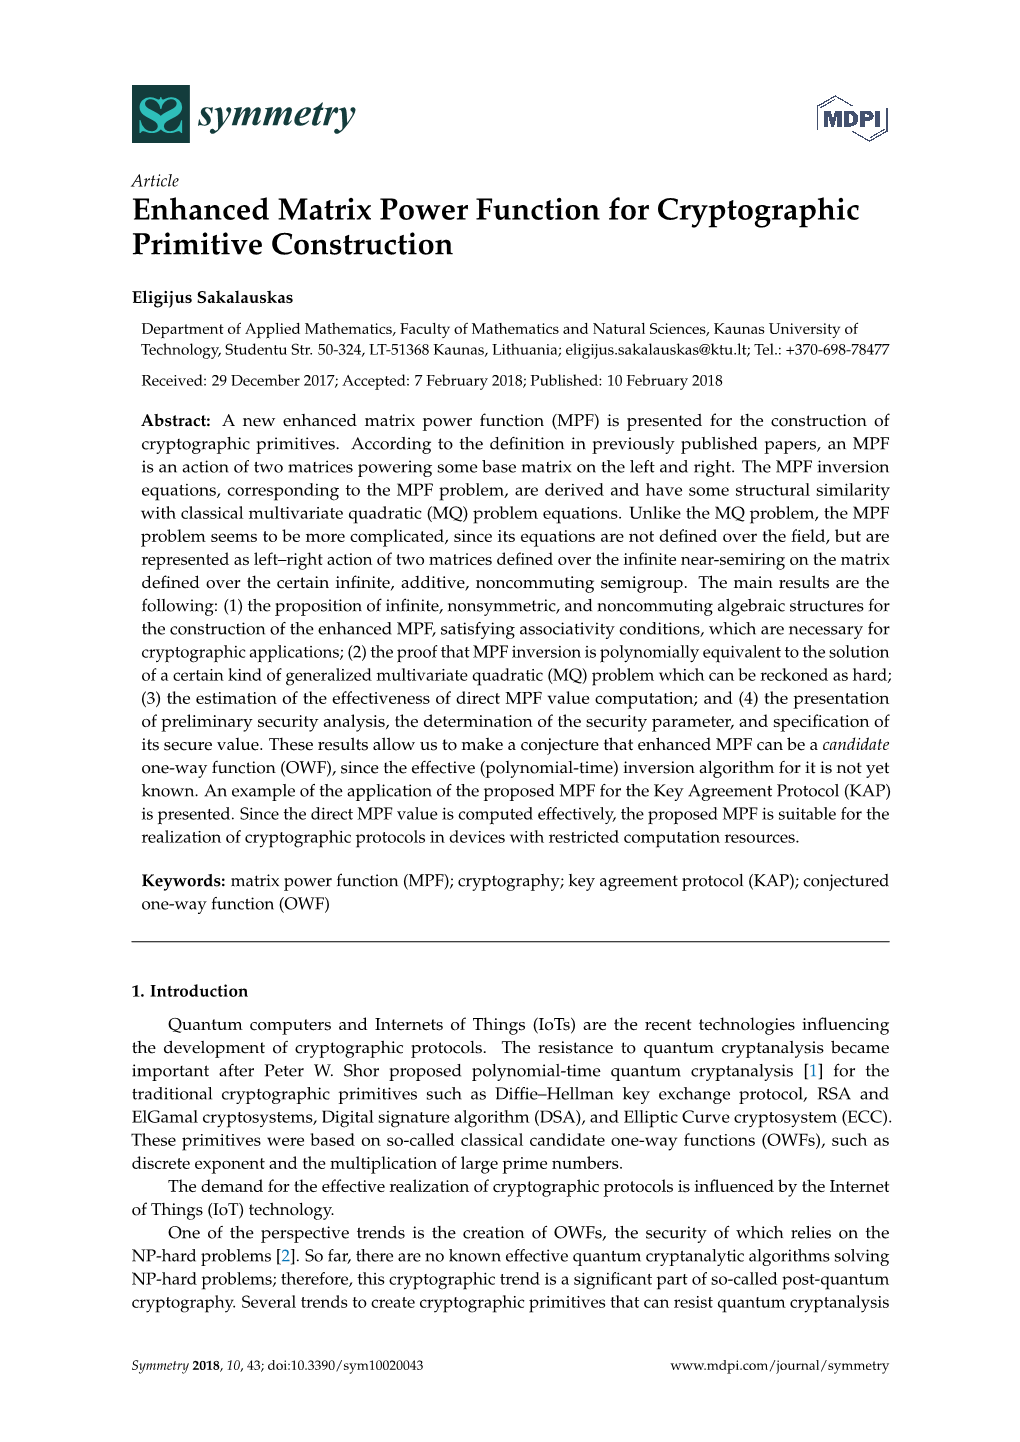 Enhanced Matrix Power Function for Cryptographic Primitive Construction